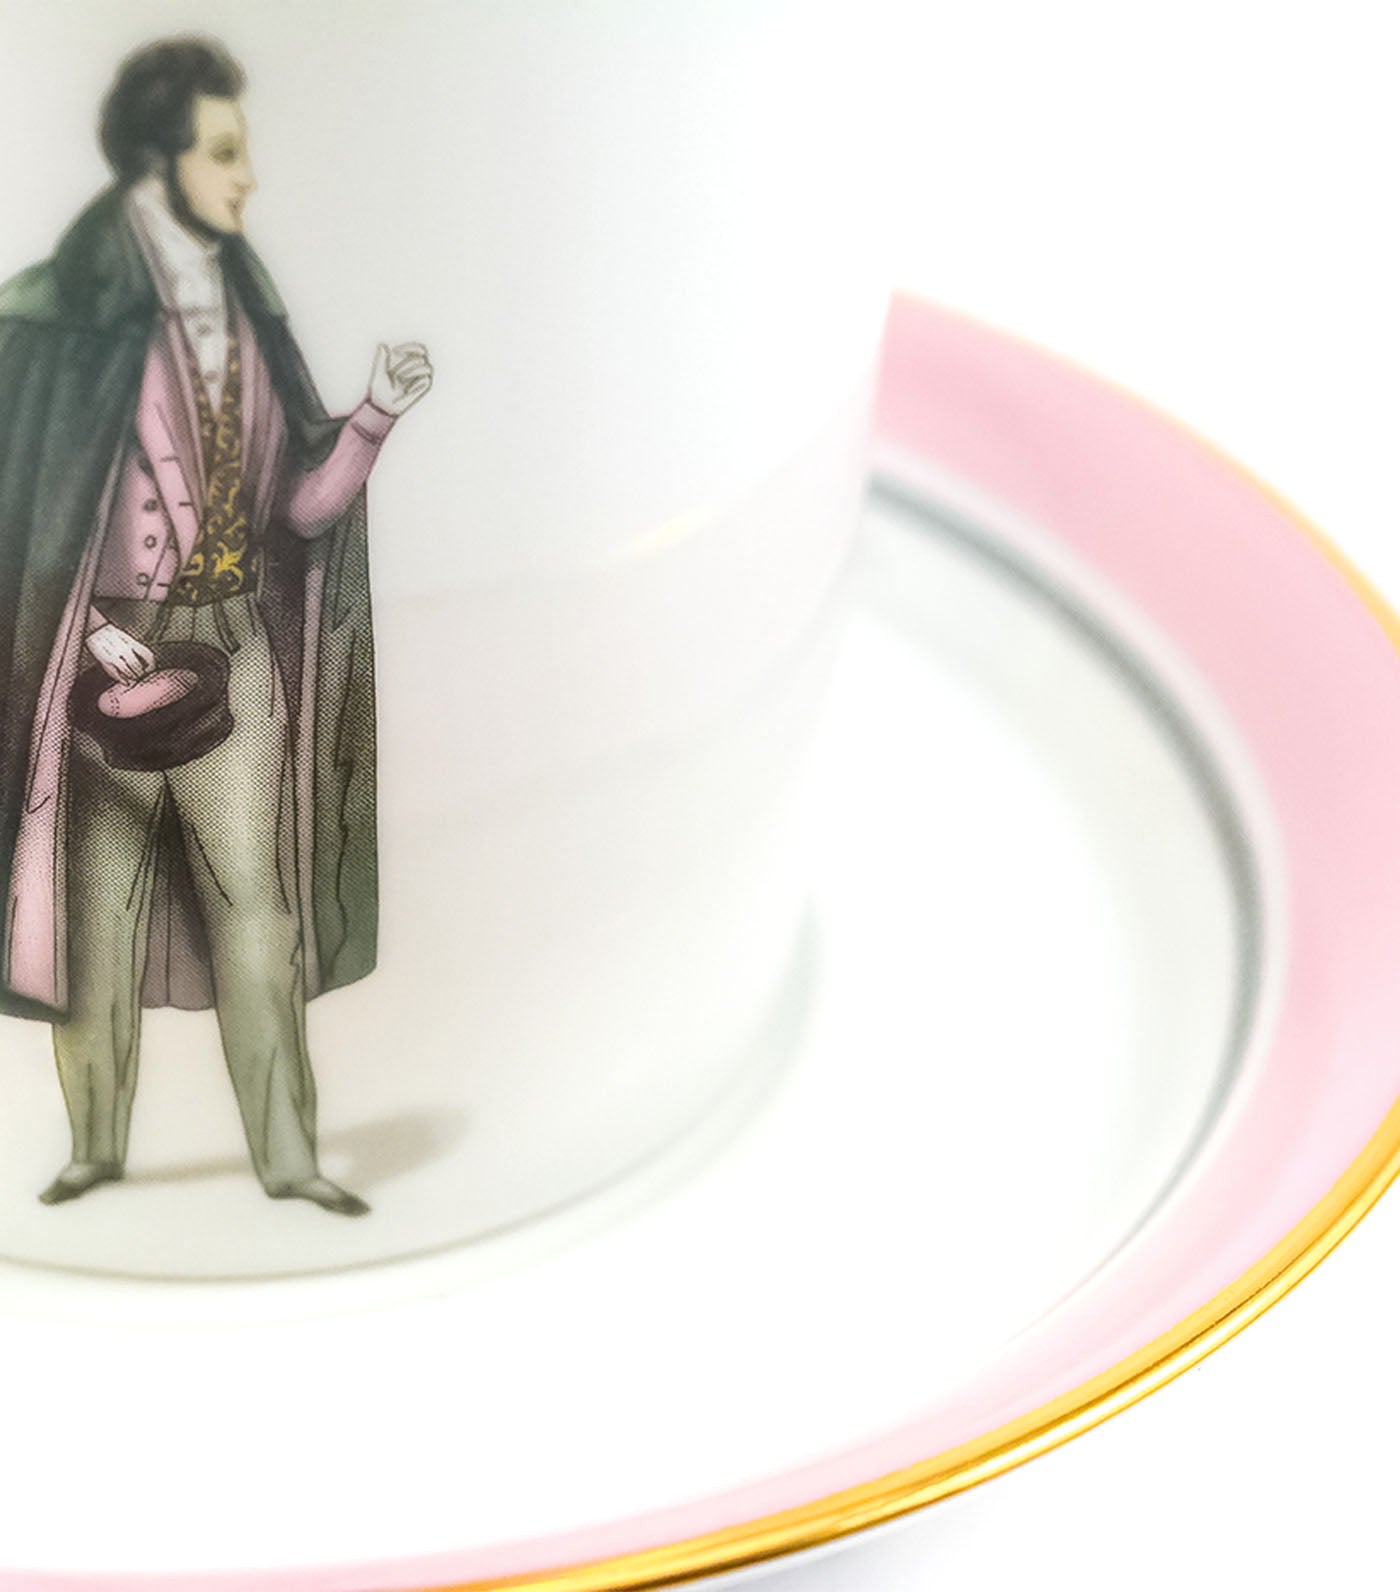 imperial porcelain modes de paris 1840 teacup and saucer heraldic